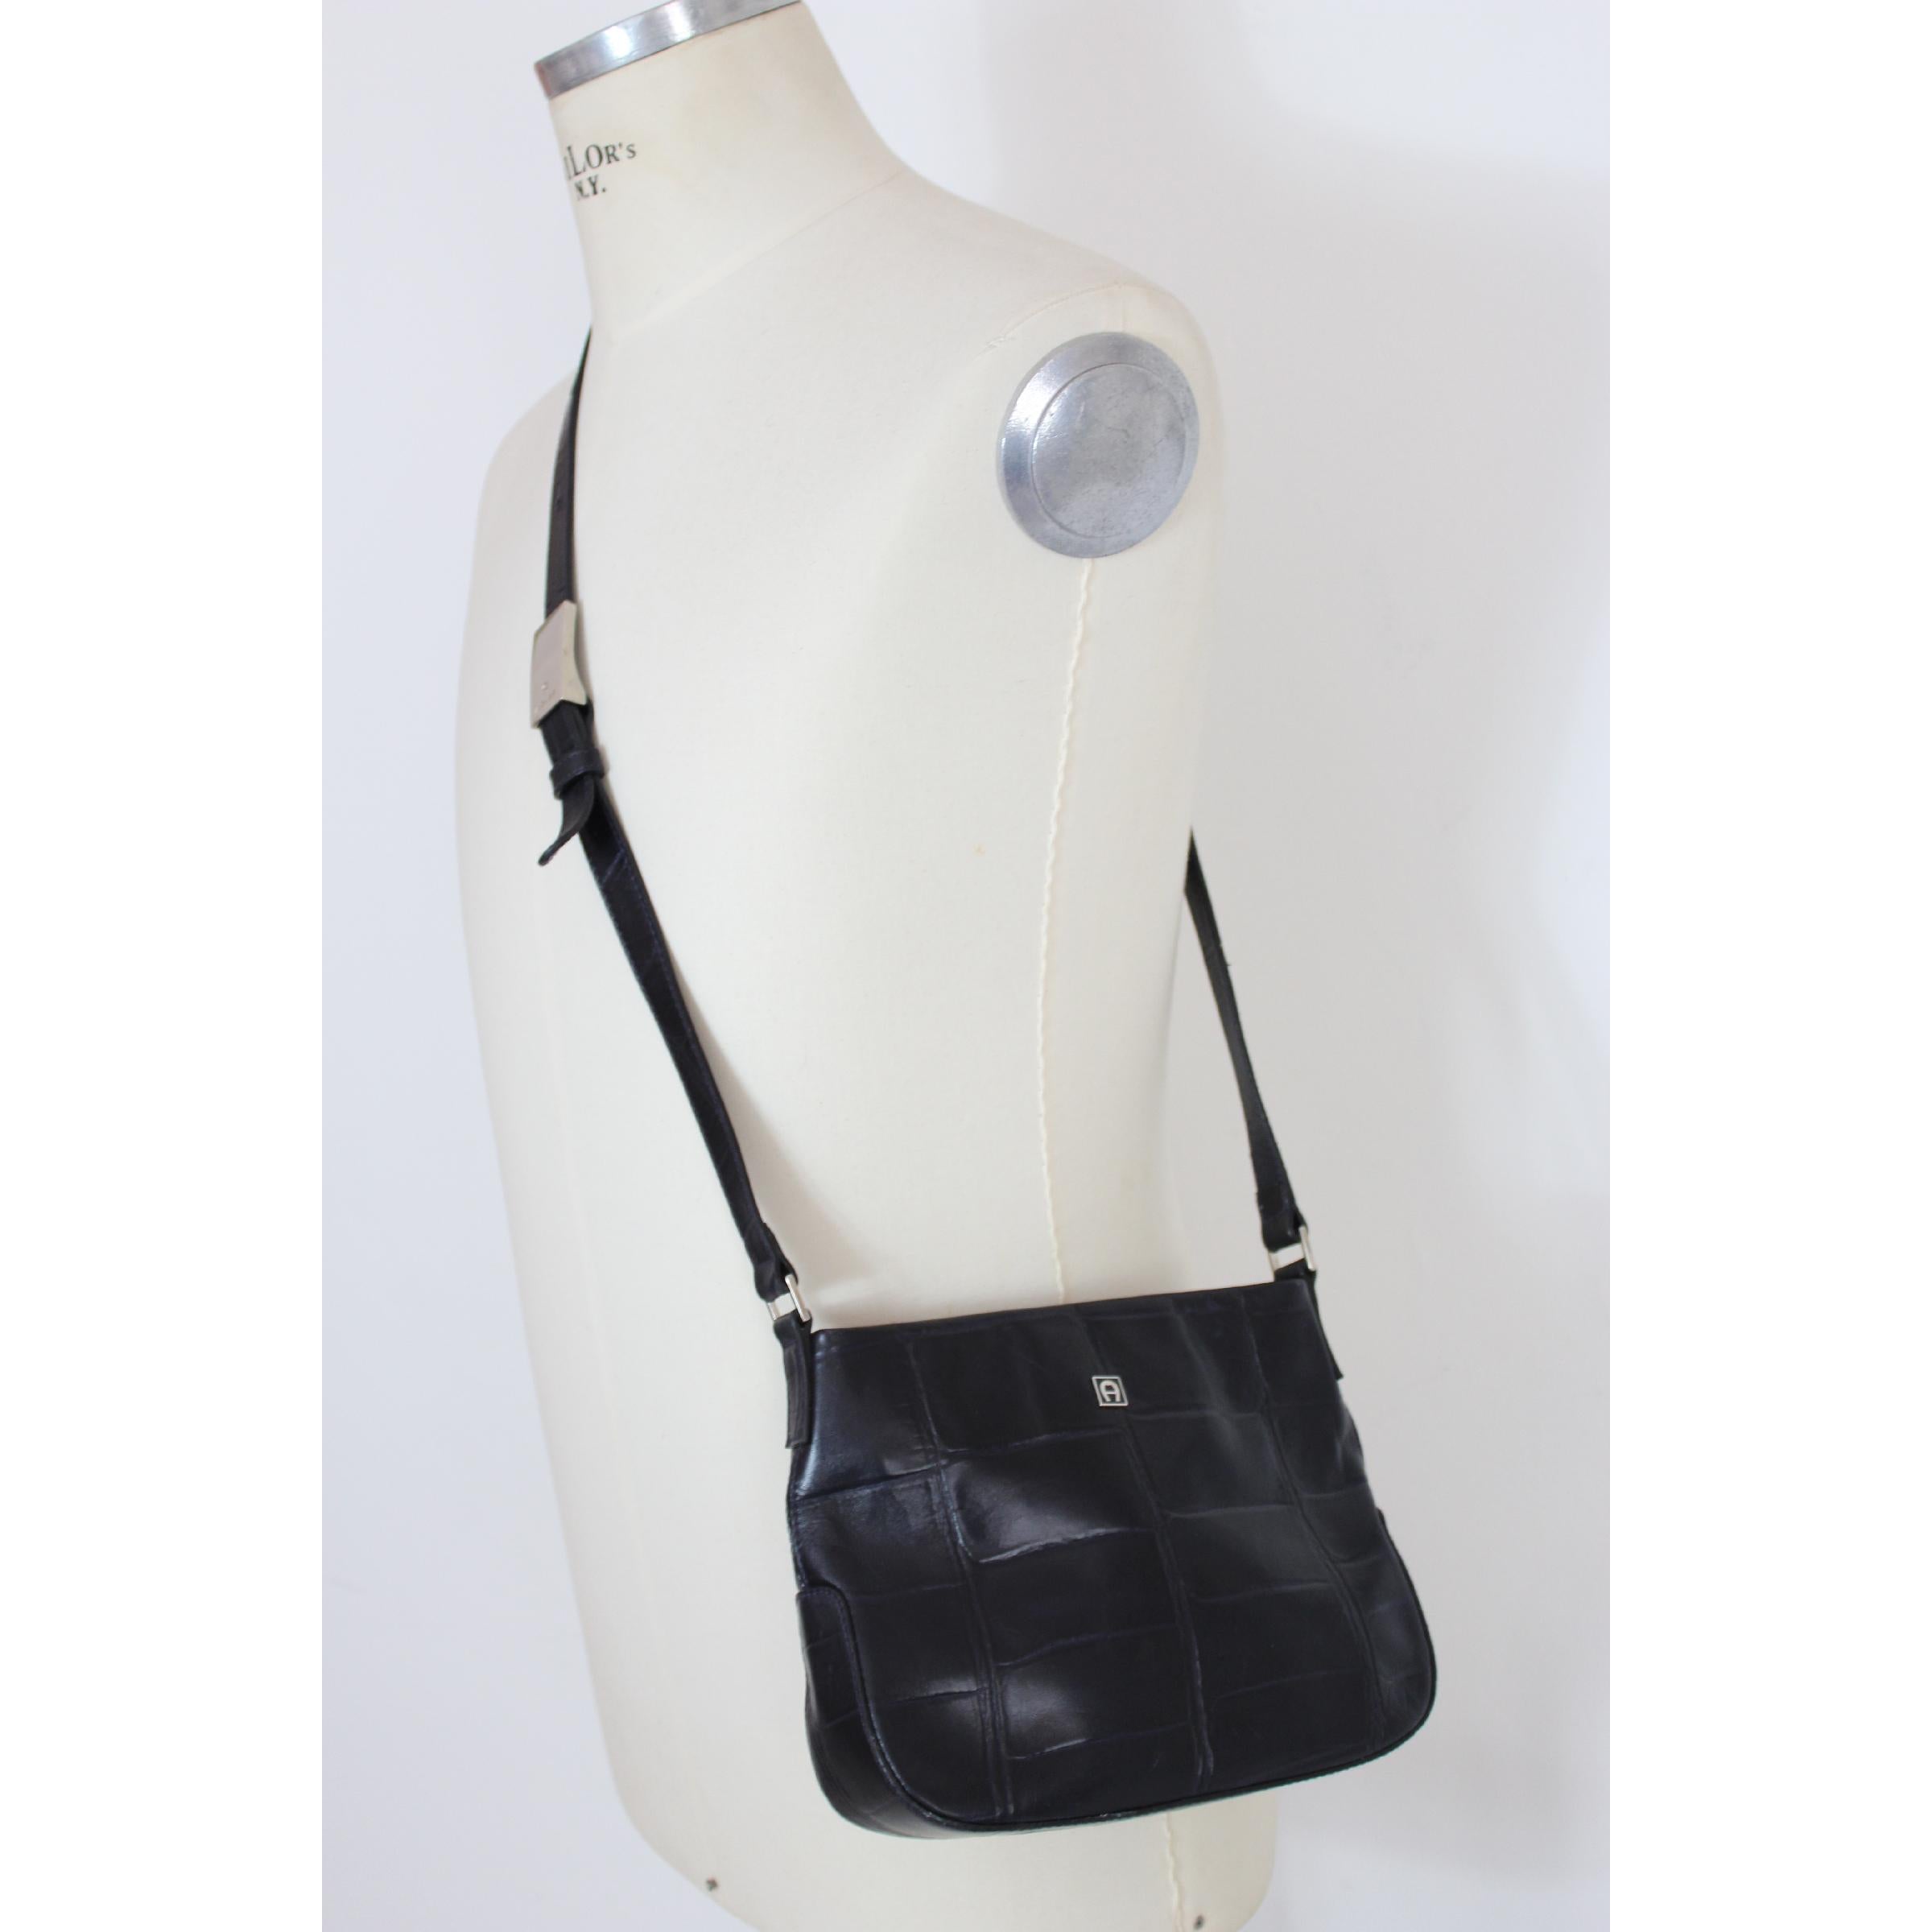 Sold at Auction: Vintage Etienne Aigner Handbags - Lot 1307